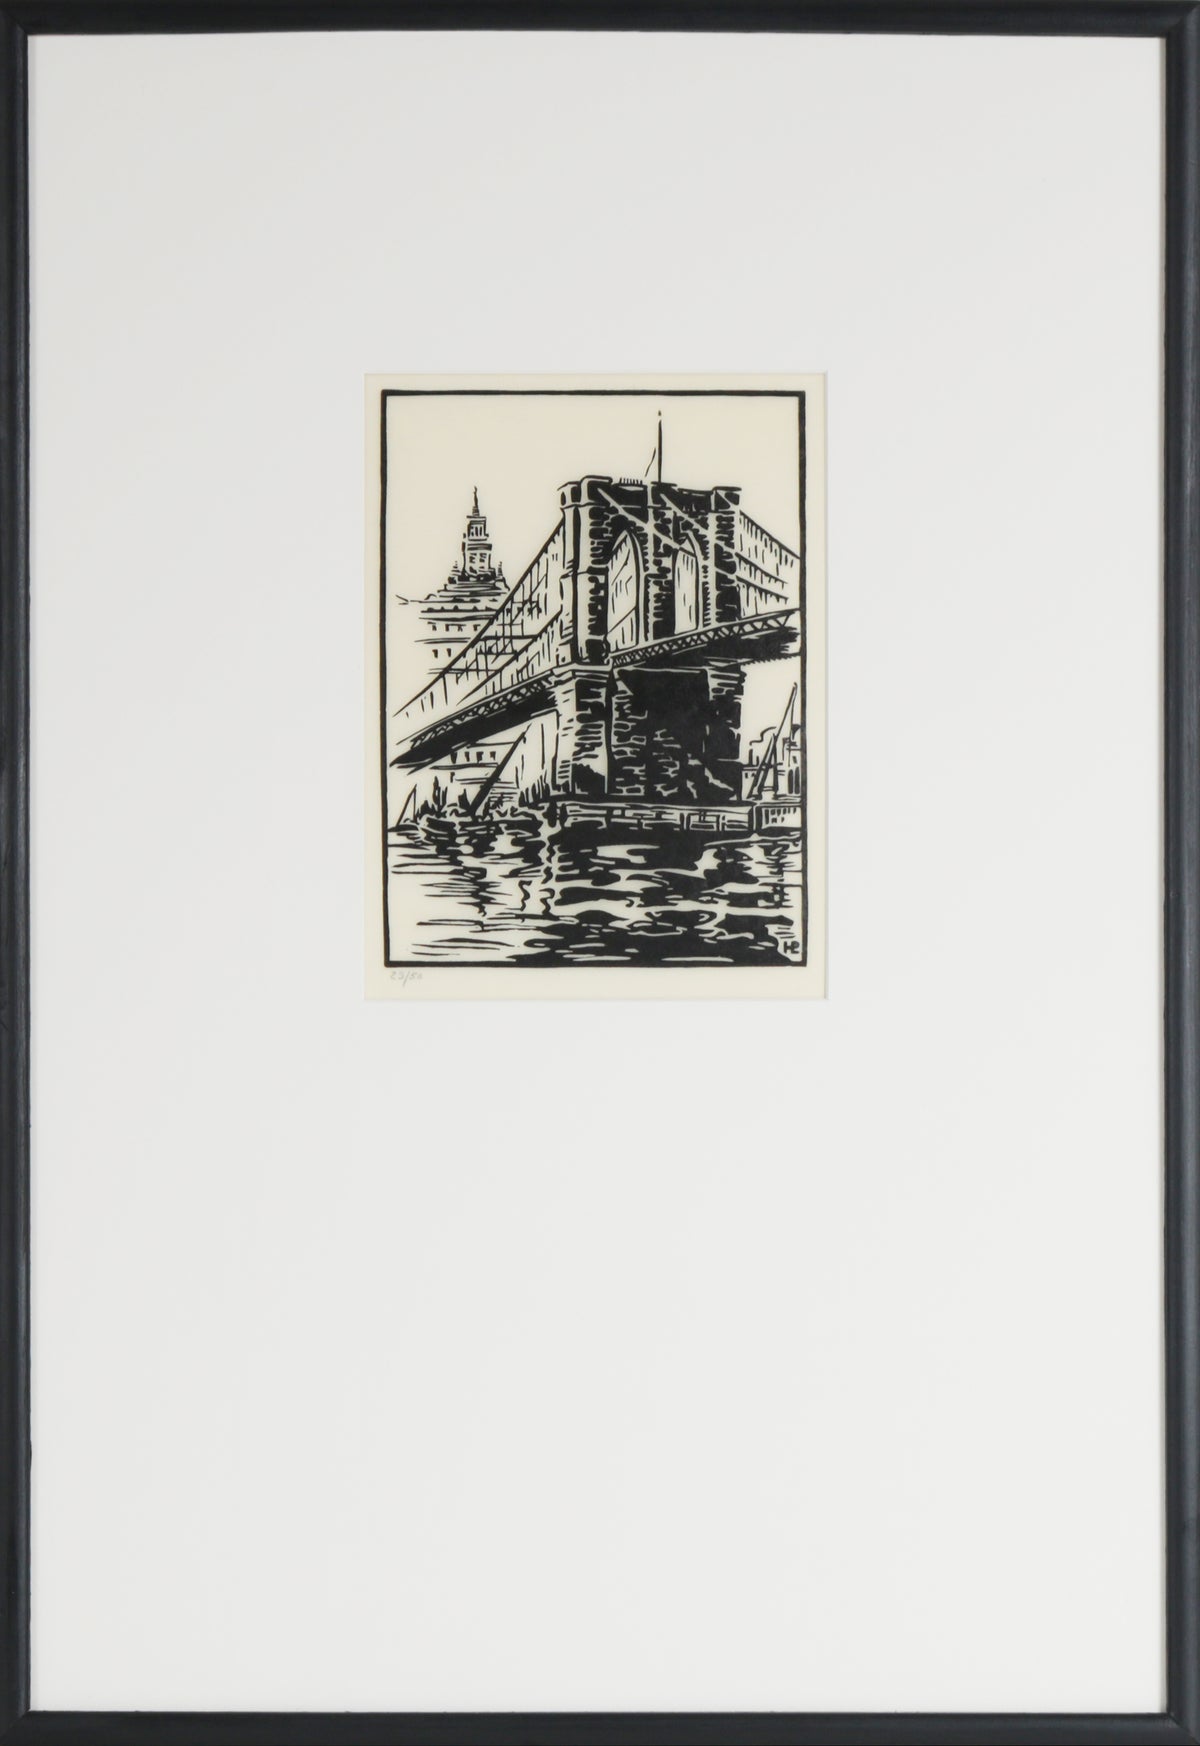 &lt;i&gt;Tower of the Brooklyn Bridge&lt;/i&gt; &lt;br&gt;1930s Woodcut &lt;br&gt;&lt;br&gt;B4216